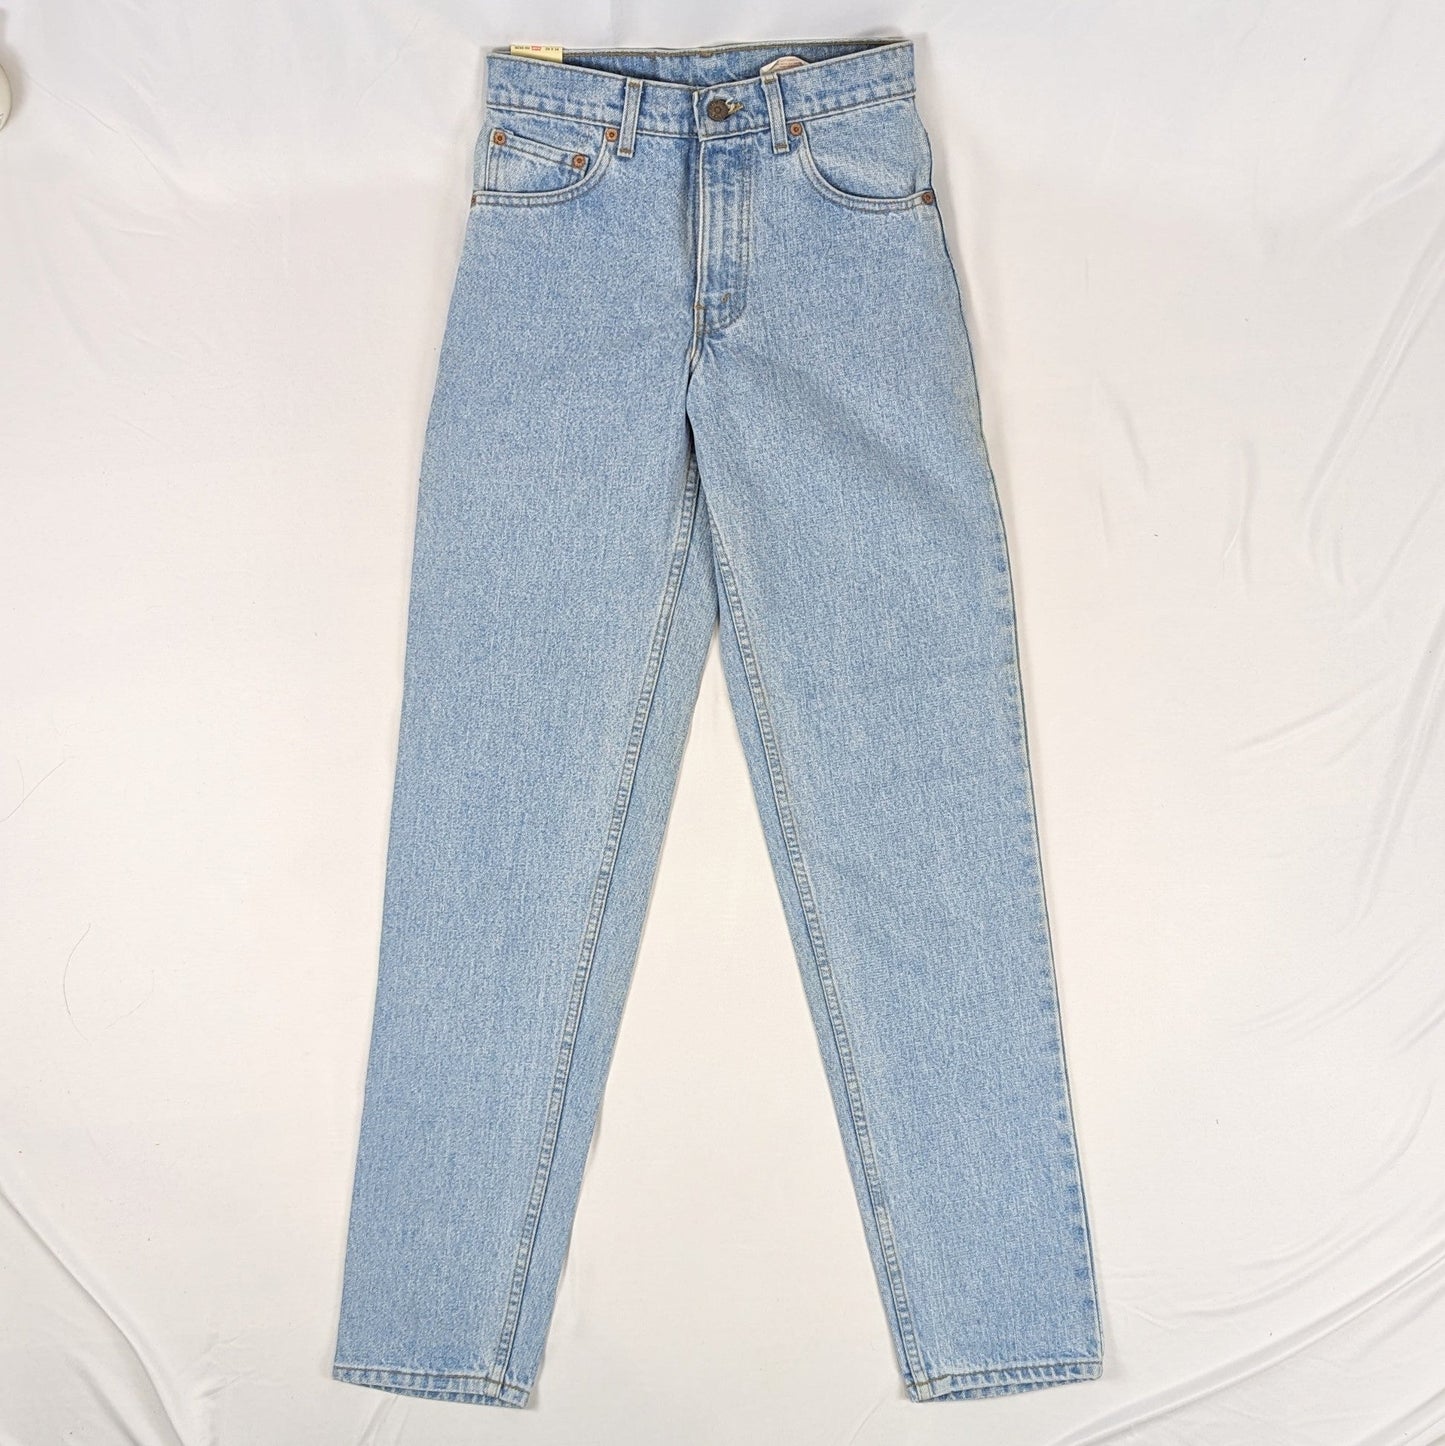 Levis jeans light blue denim deadstock made in Canada